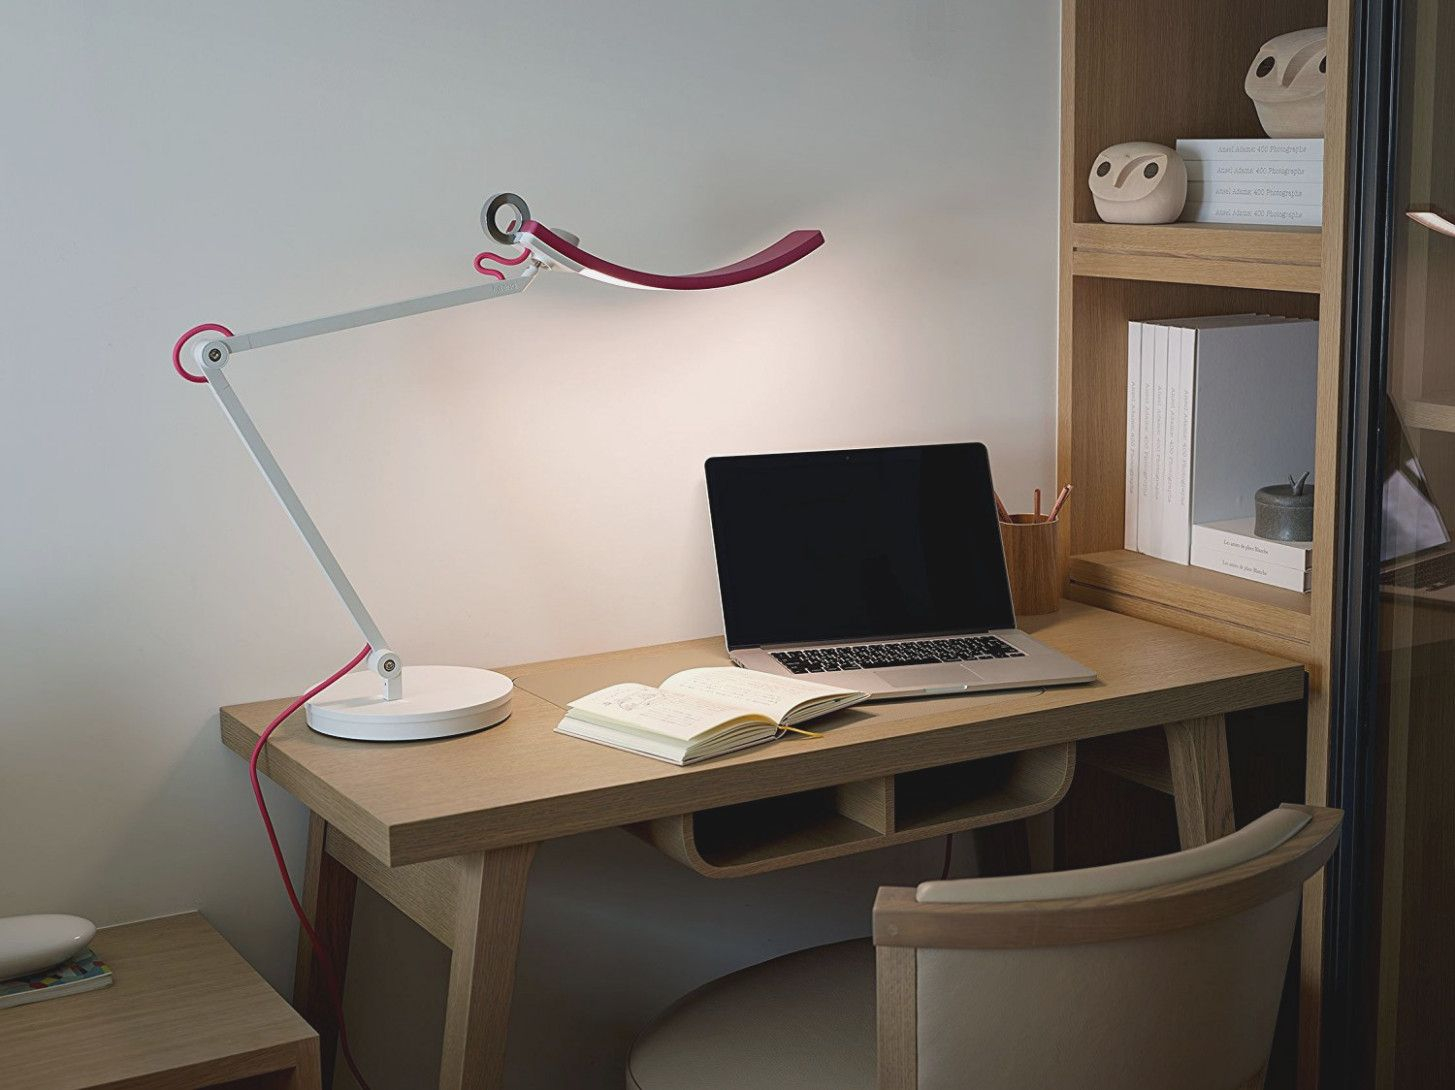 Best Desk Light For Studying Dimmable Led Desk Lamps inside sizing 1455 X 1090